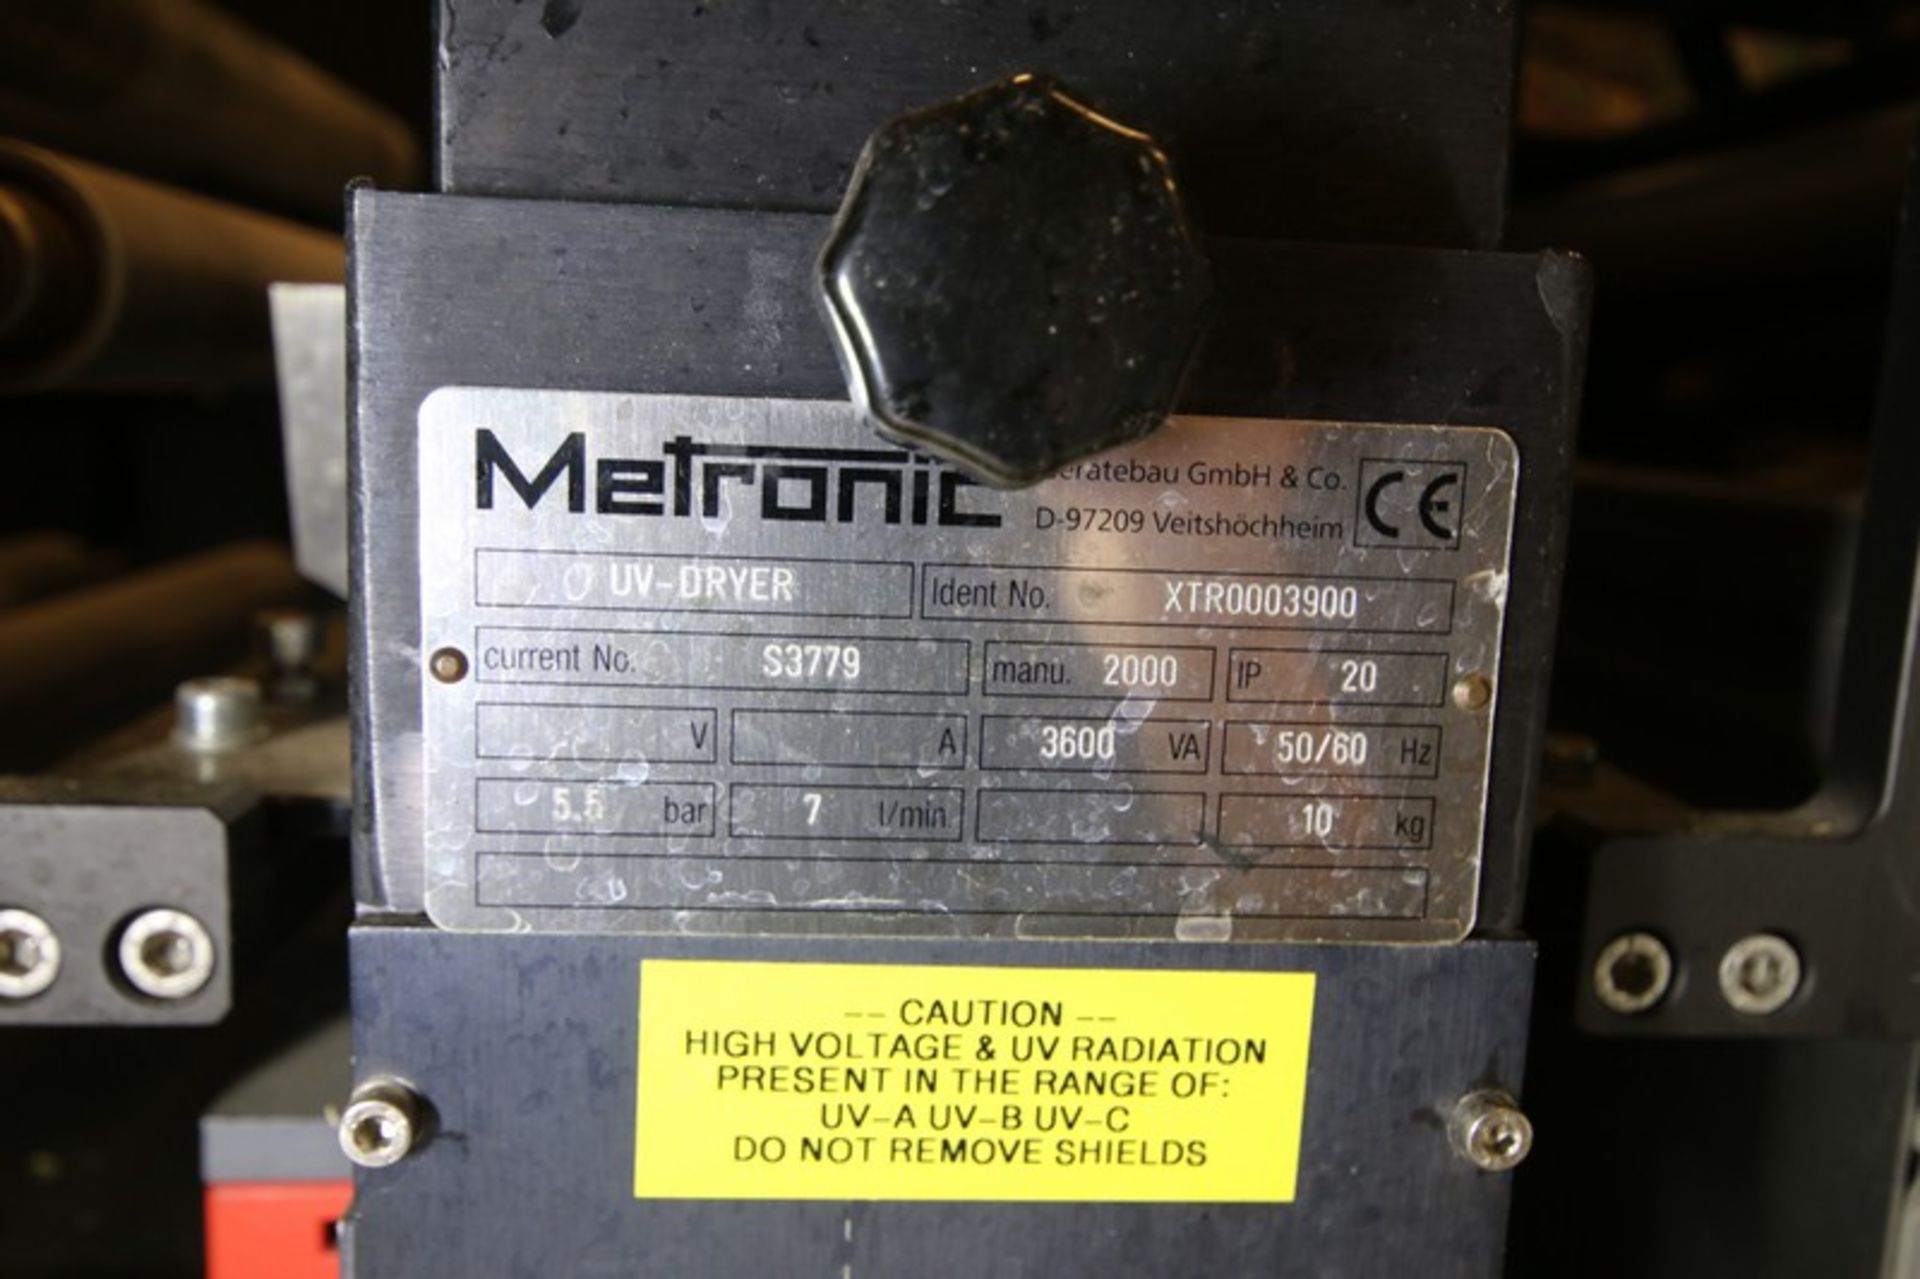 Metronic inPrint 310 UV Printer, 12" W, ID# MF831018-S018-02, with UV Dryer ID #XTR0003900, 208V, - Image 7 of 8